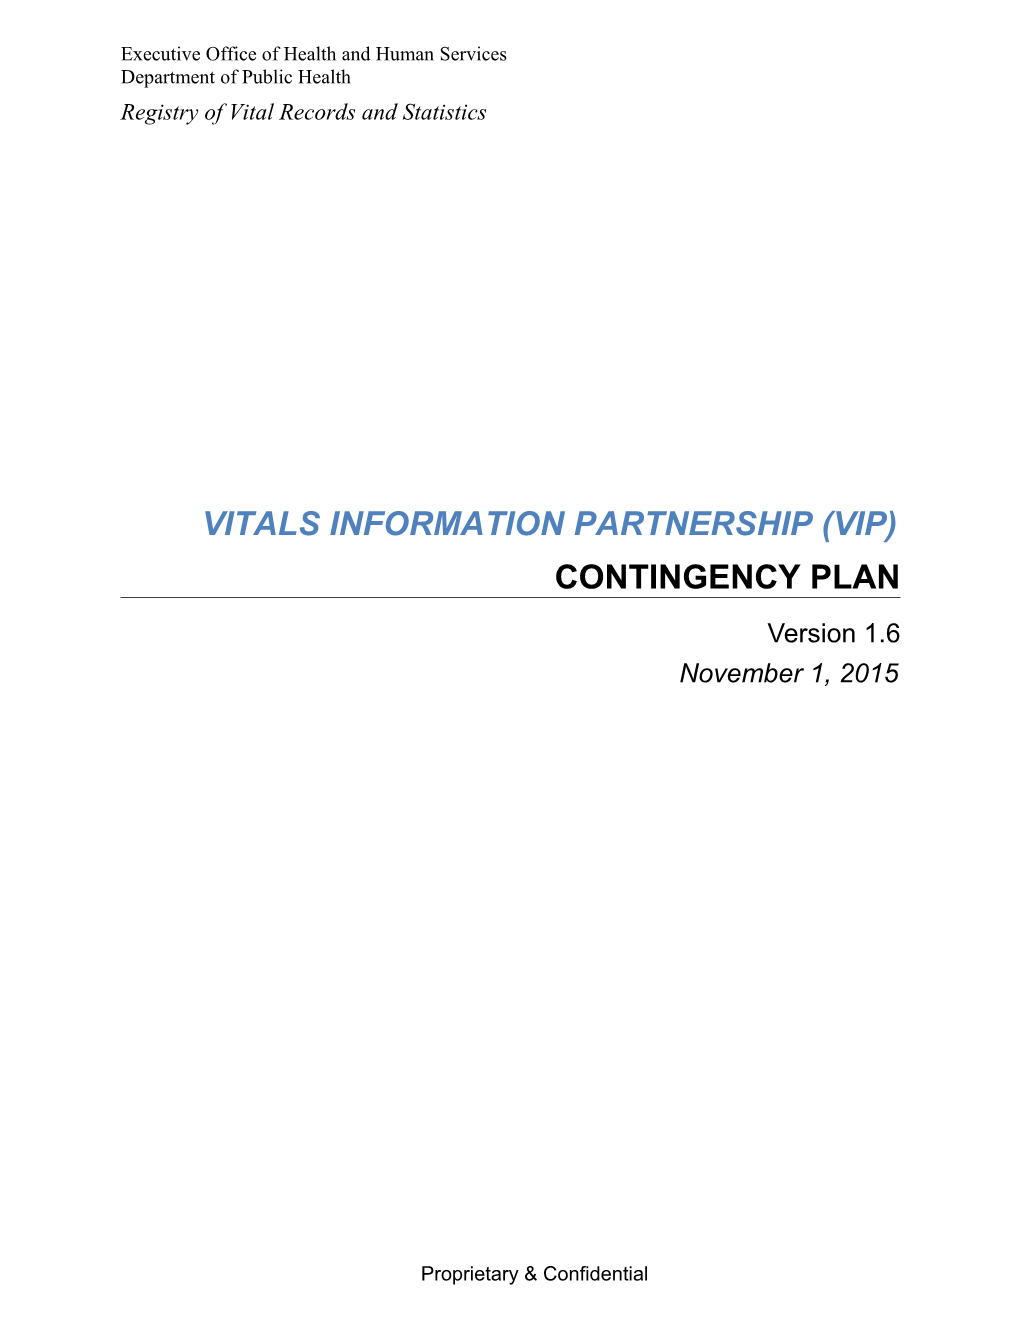 Vitals Information Partnership (VIP)